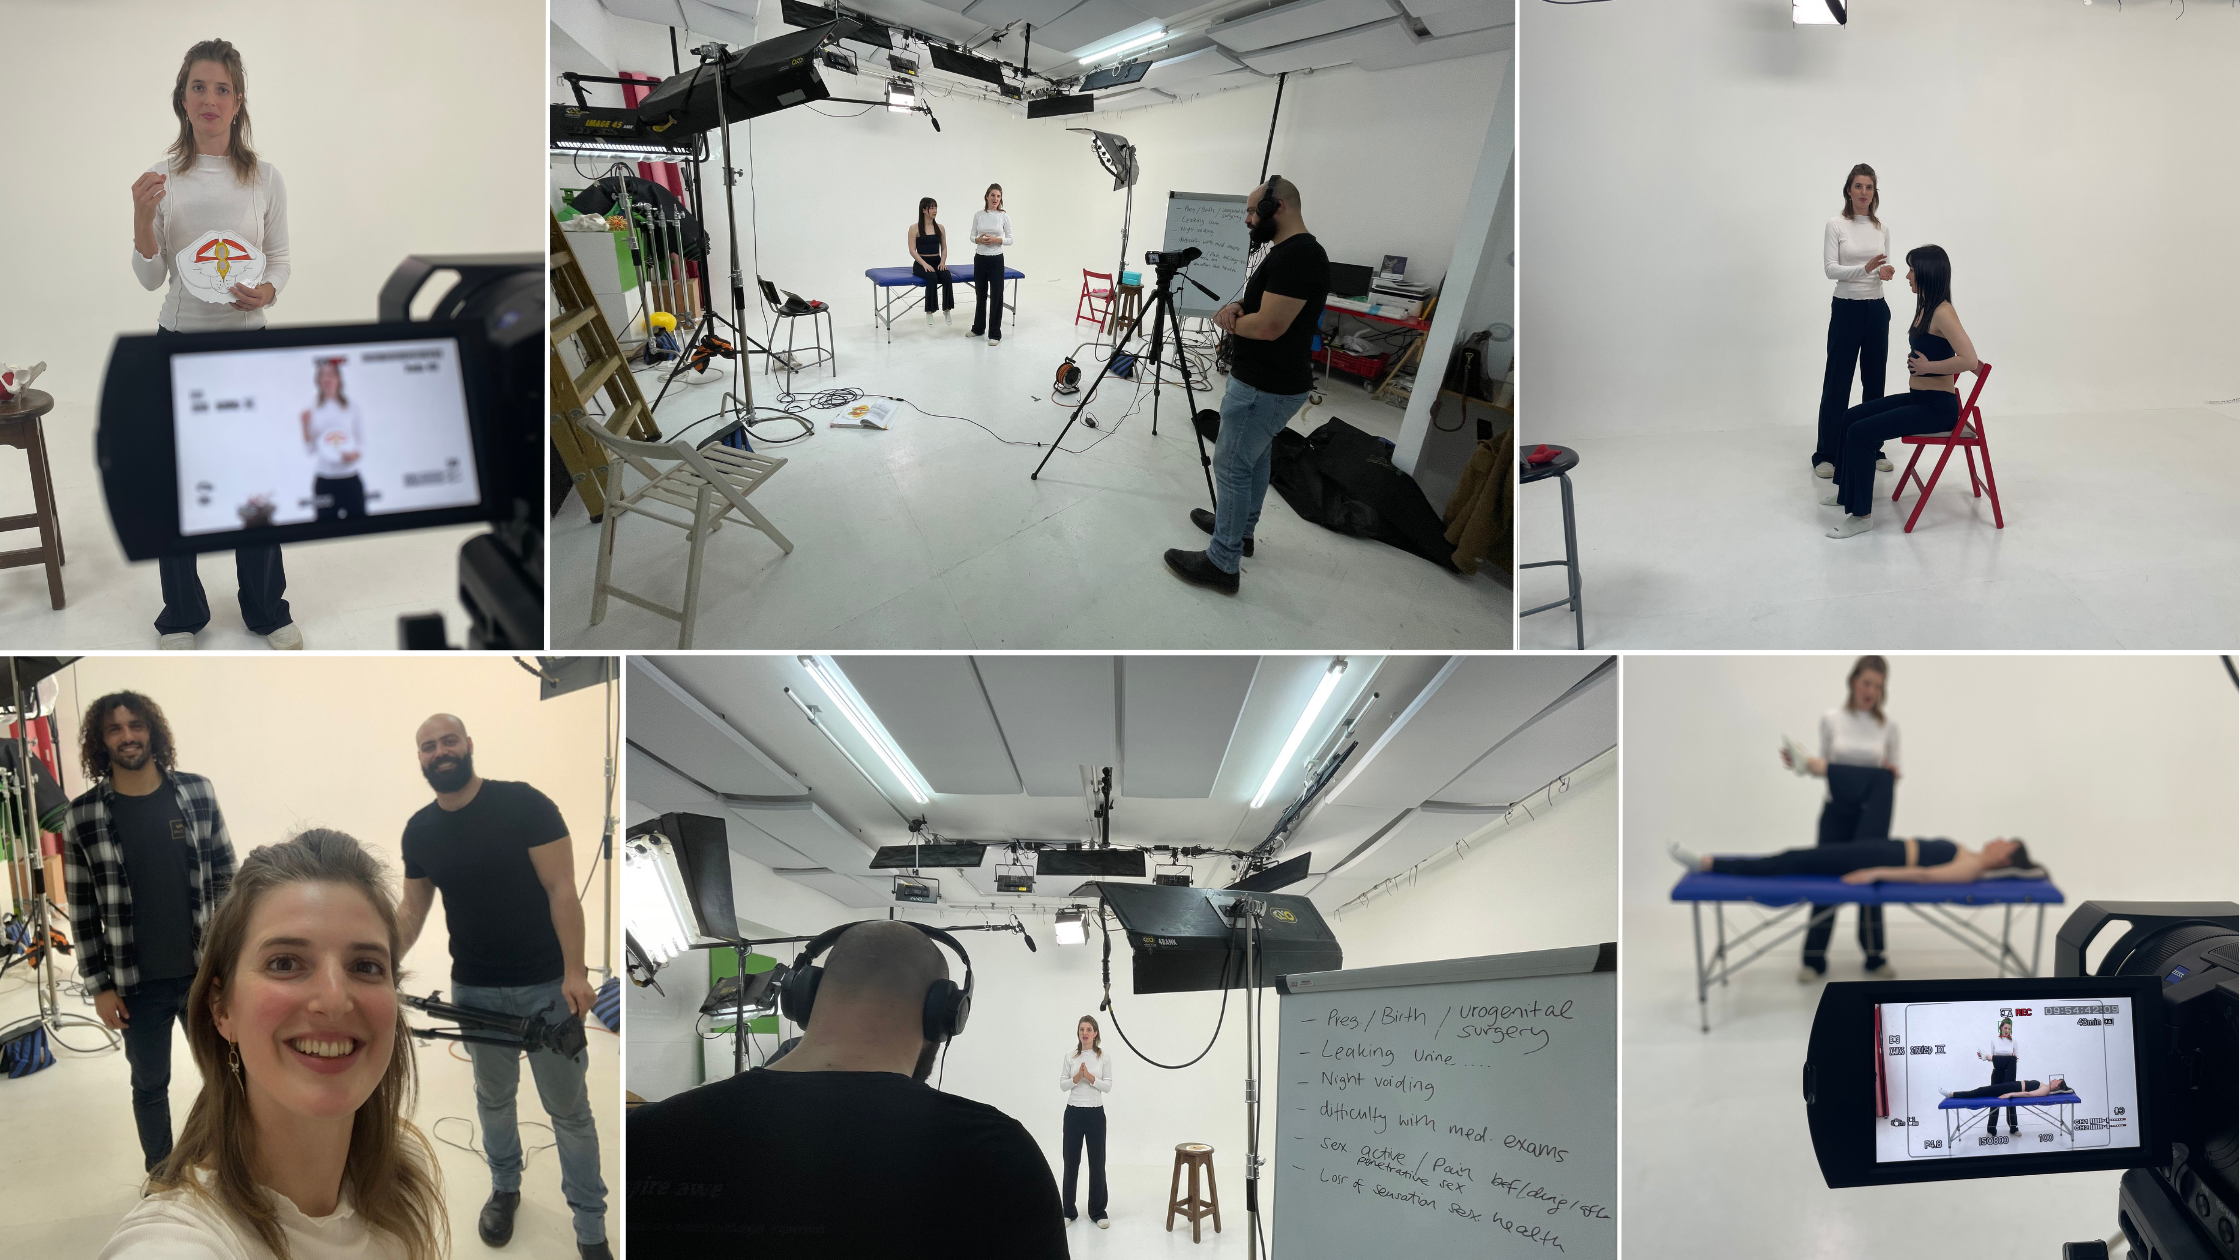 Behind the scenes filming Pelvic Floor Course at NAT Global Campus studios